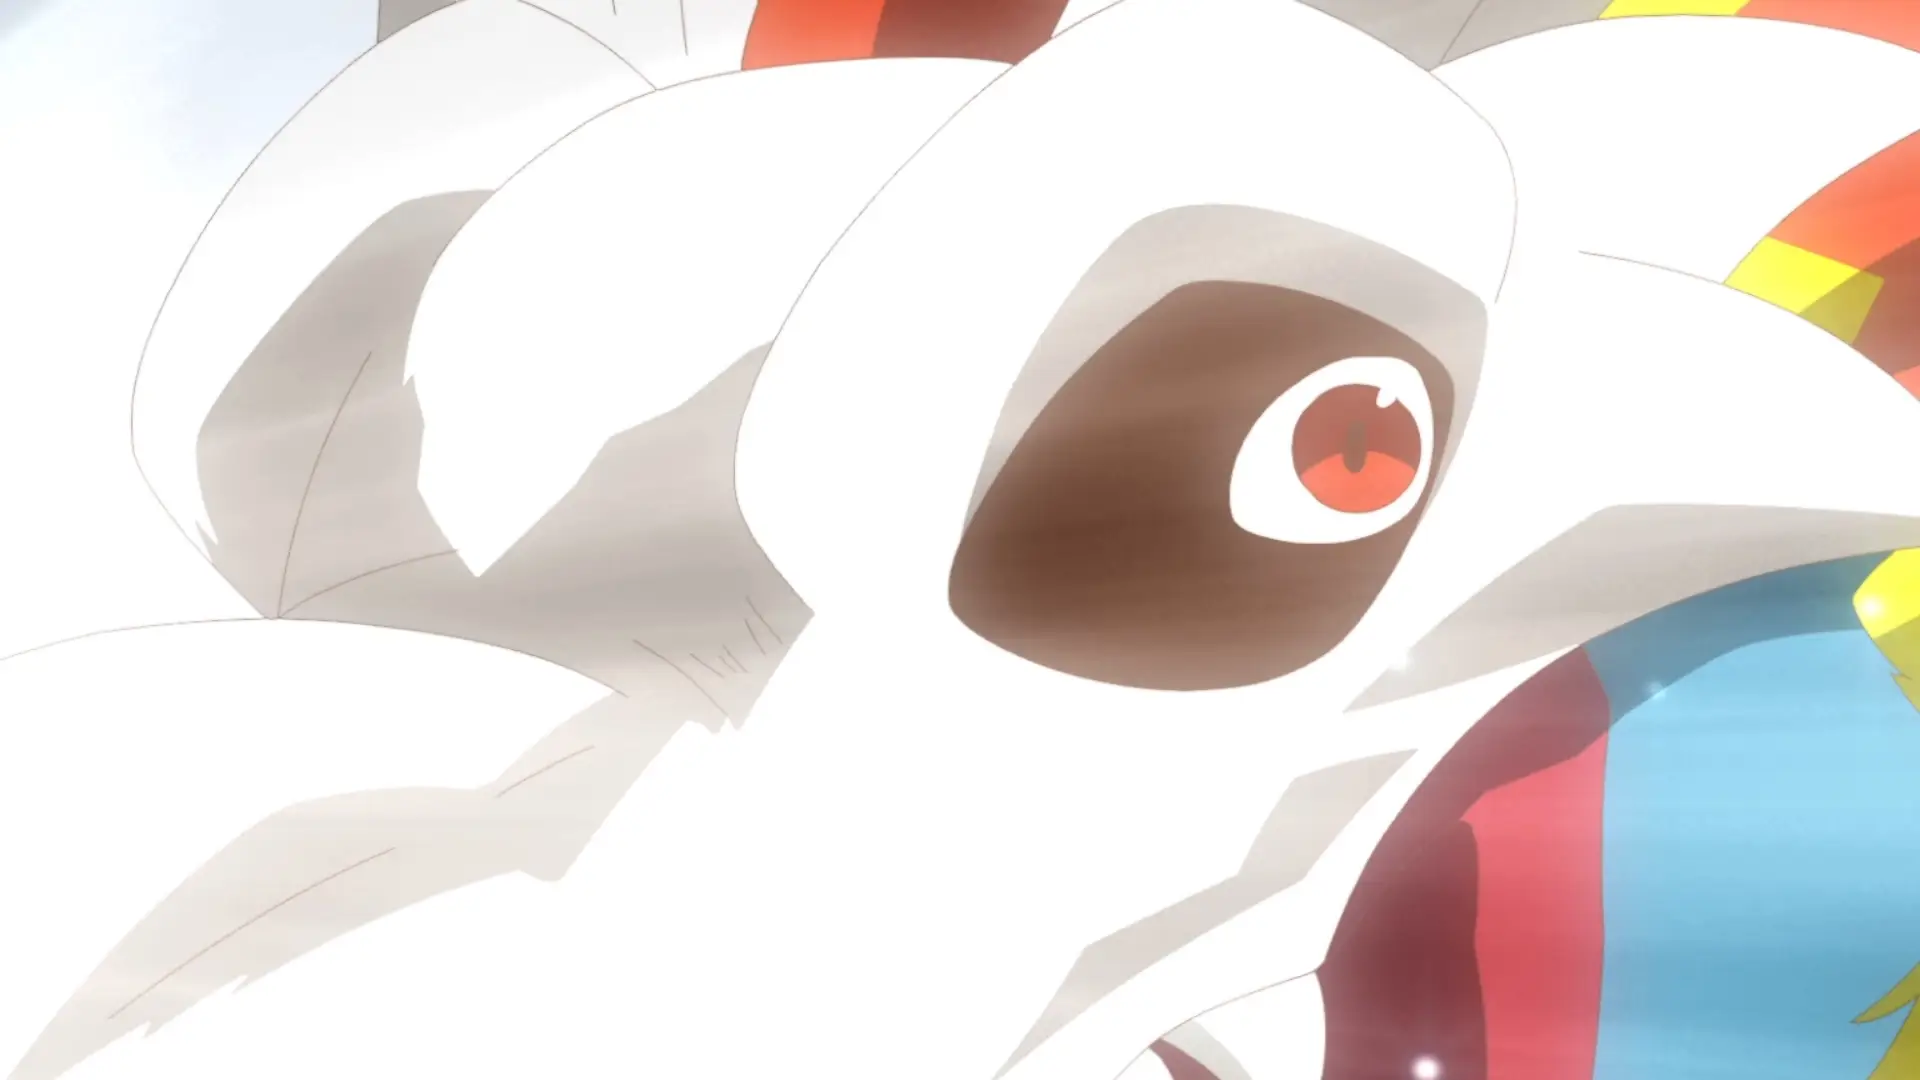 Digimon Ghost Game Episode 55 Bakeneko